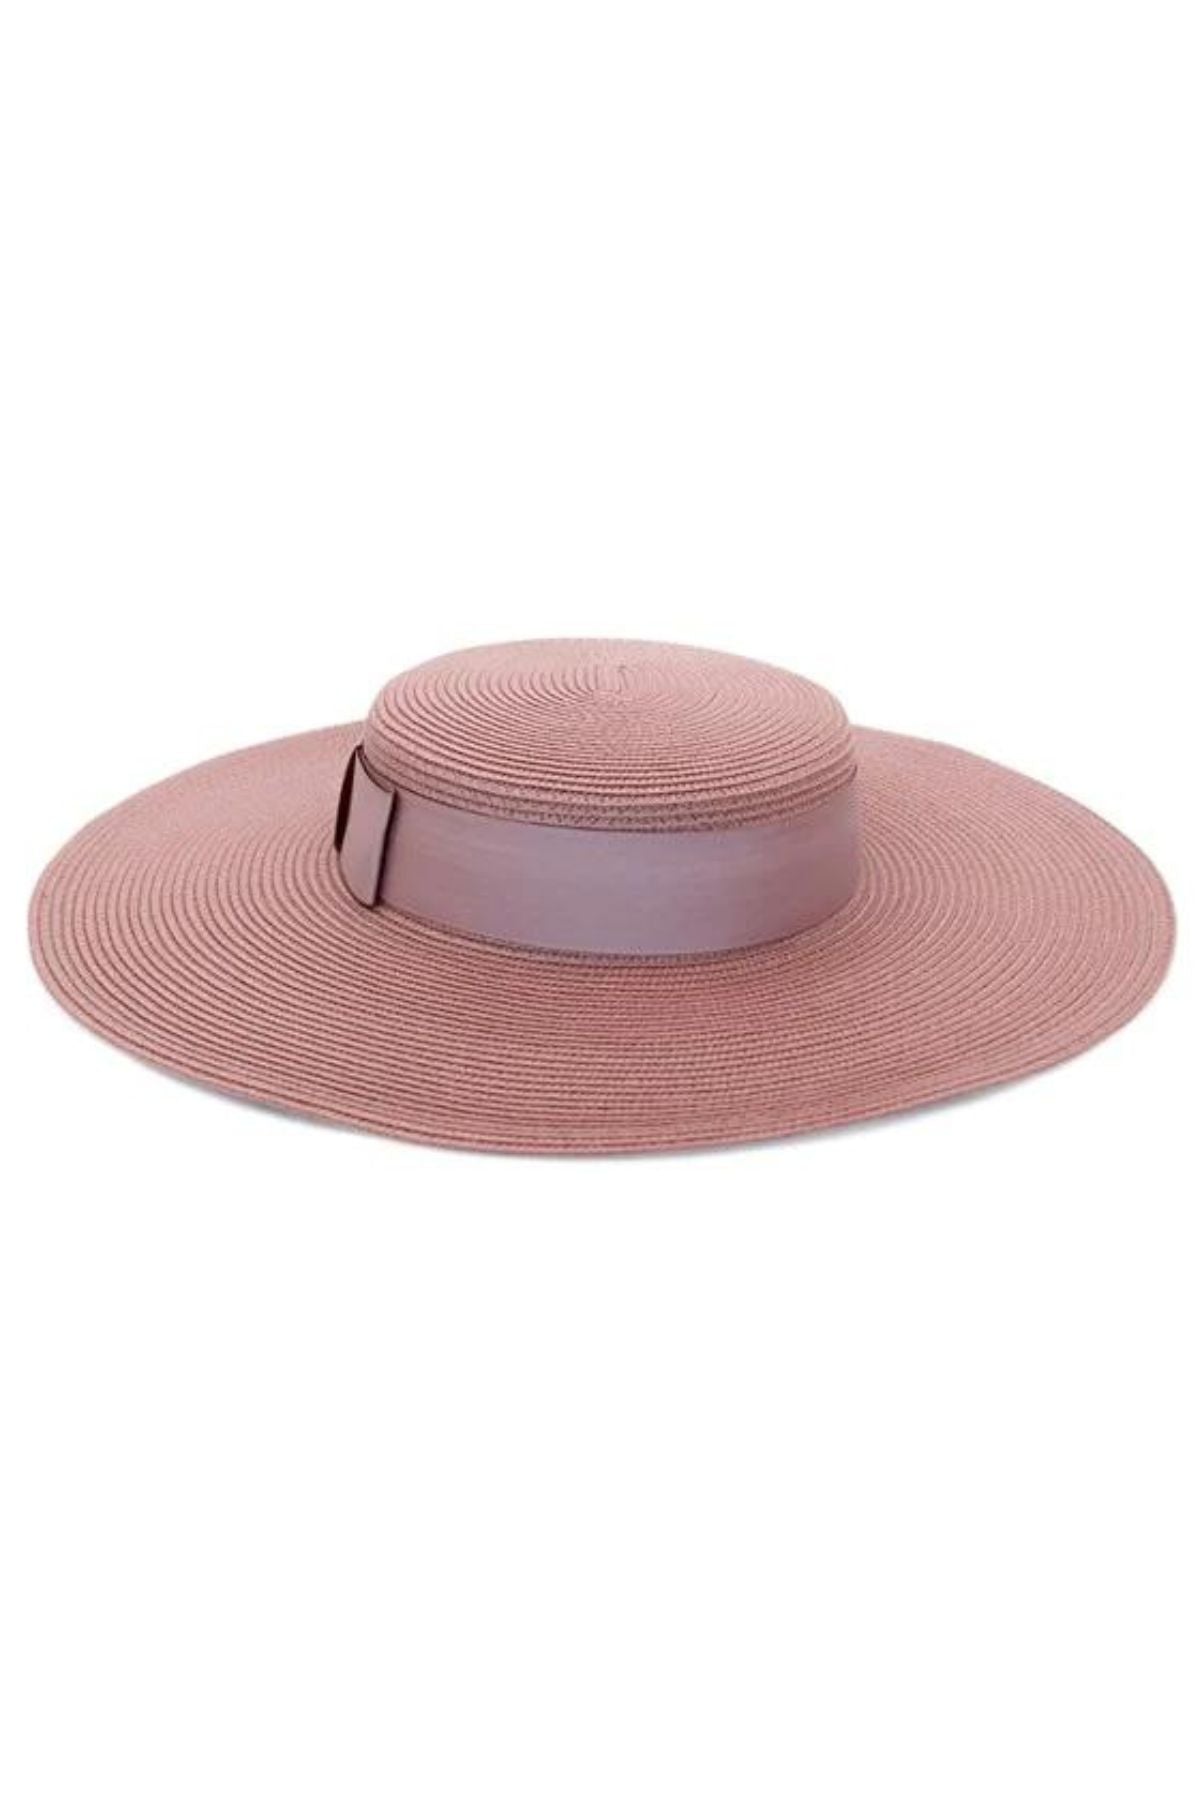 Morgan and Taylor Hire MORGAN & TAYLOR Macy Boater Hat (Blush Pink) - 9_06bdc22e-2d6b-44d0-a7b6-0c9e31066261.jpg